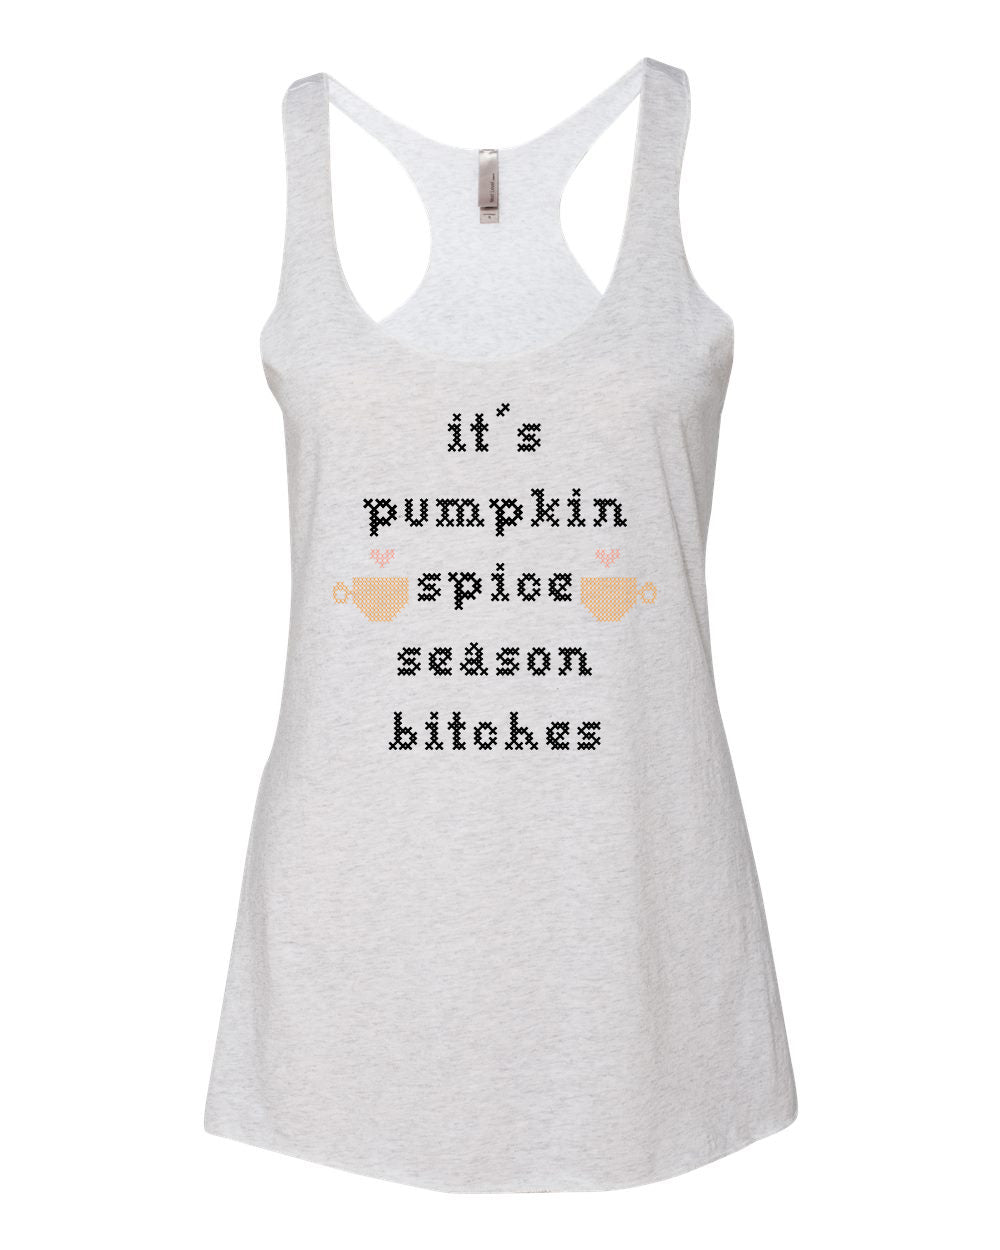 It's Pumpkin Spice Season Bitches - Cross Stitch Design - Women's Tank - White